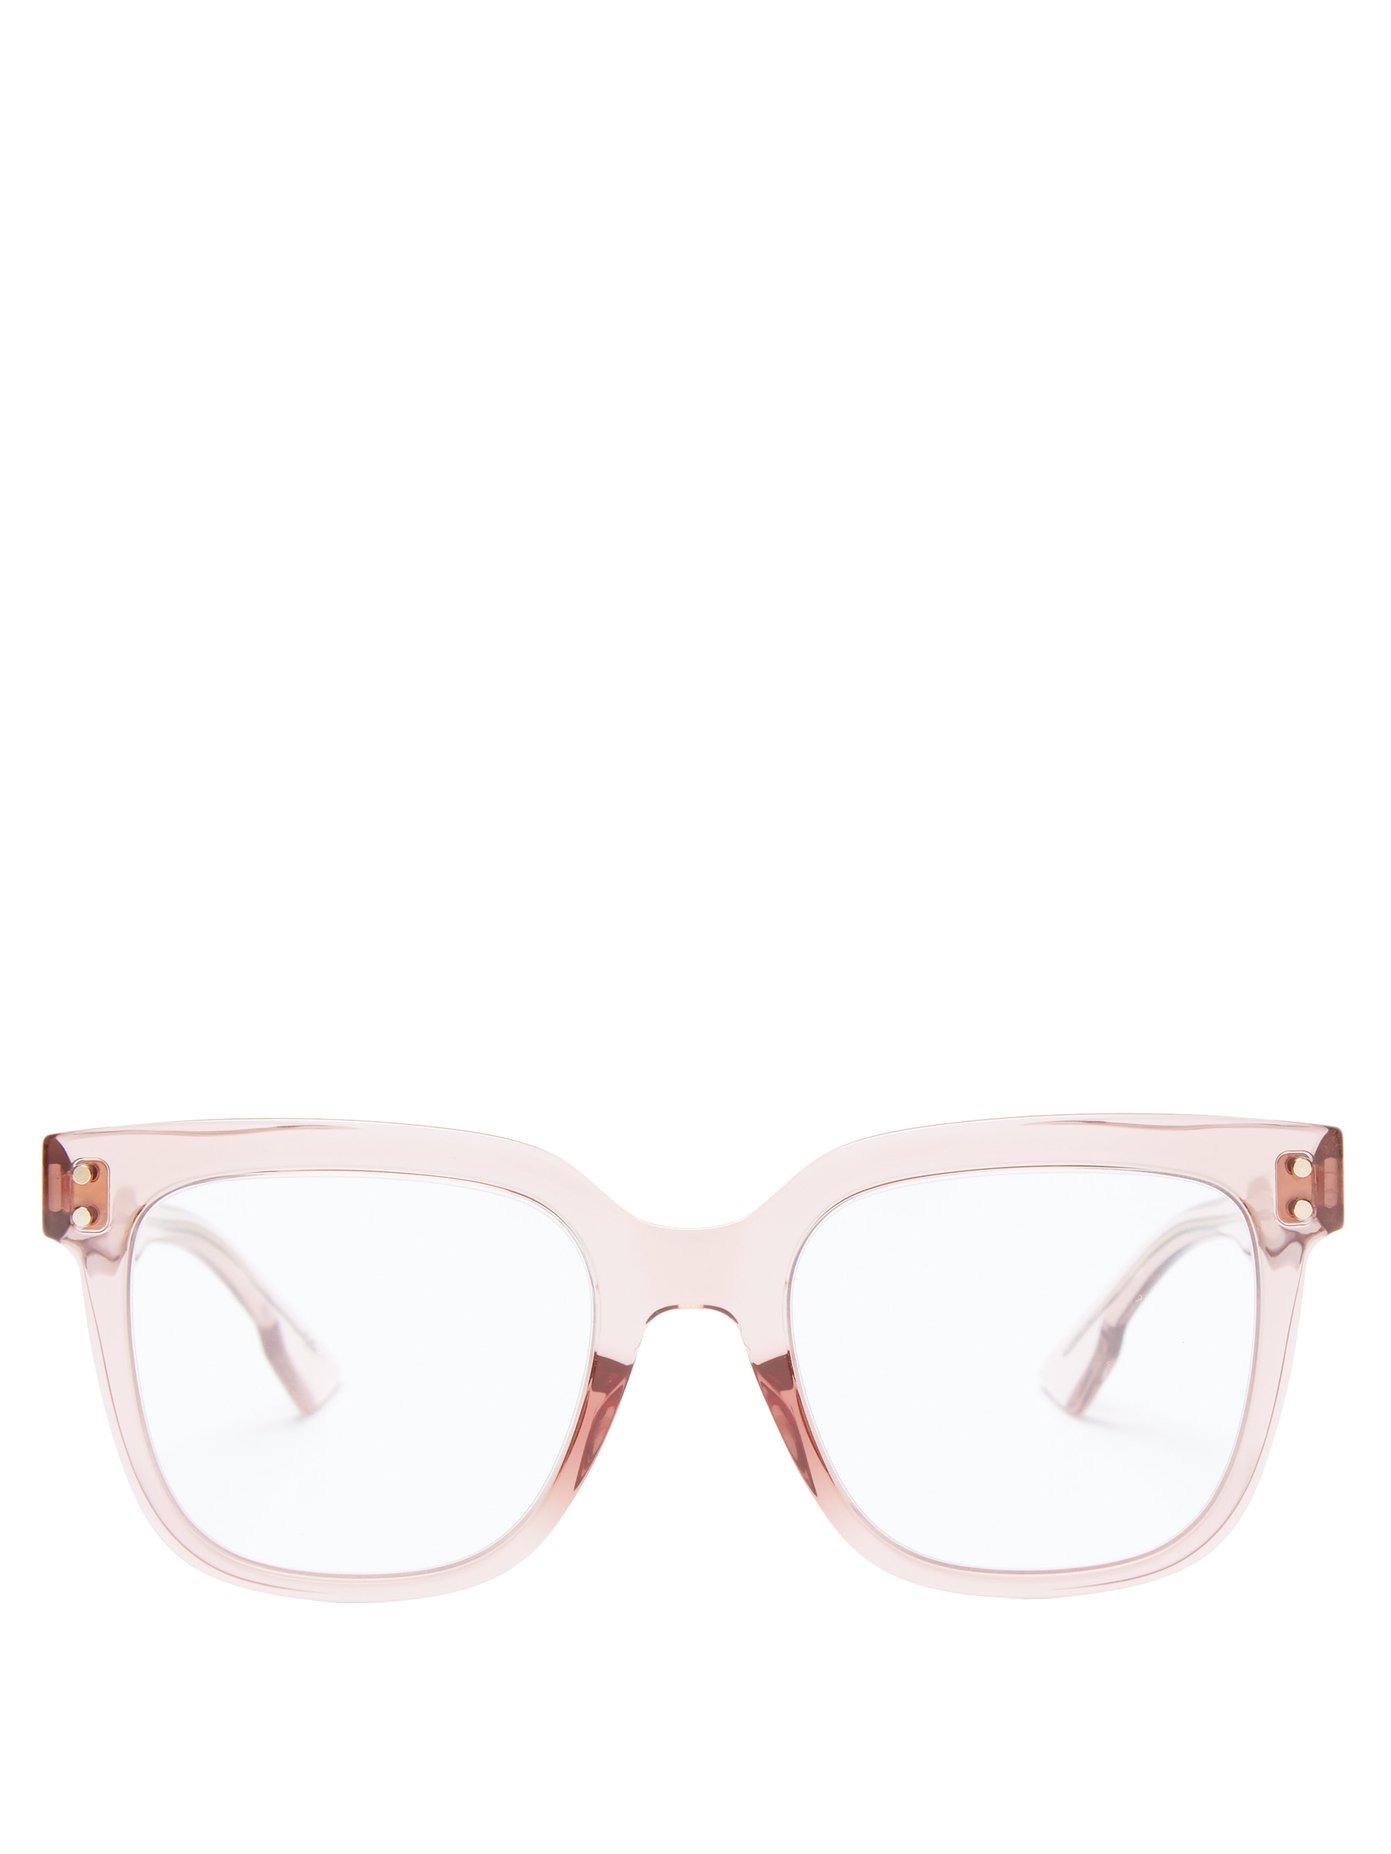 dior glasses frame